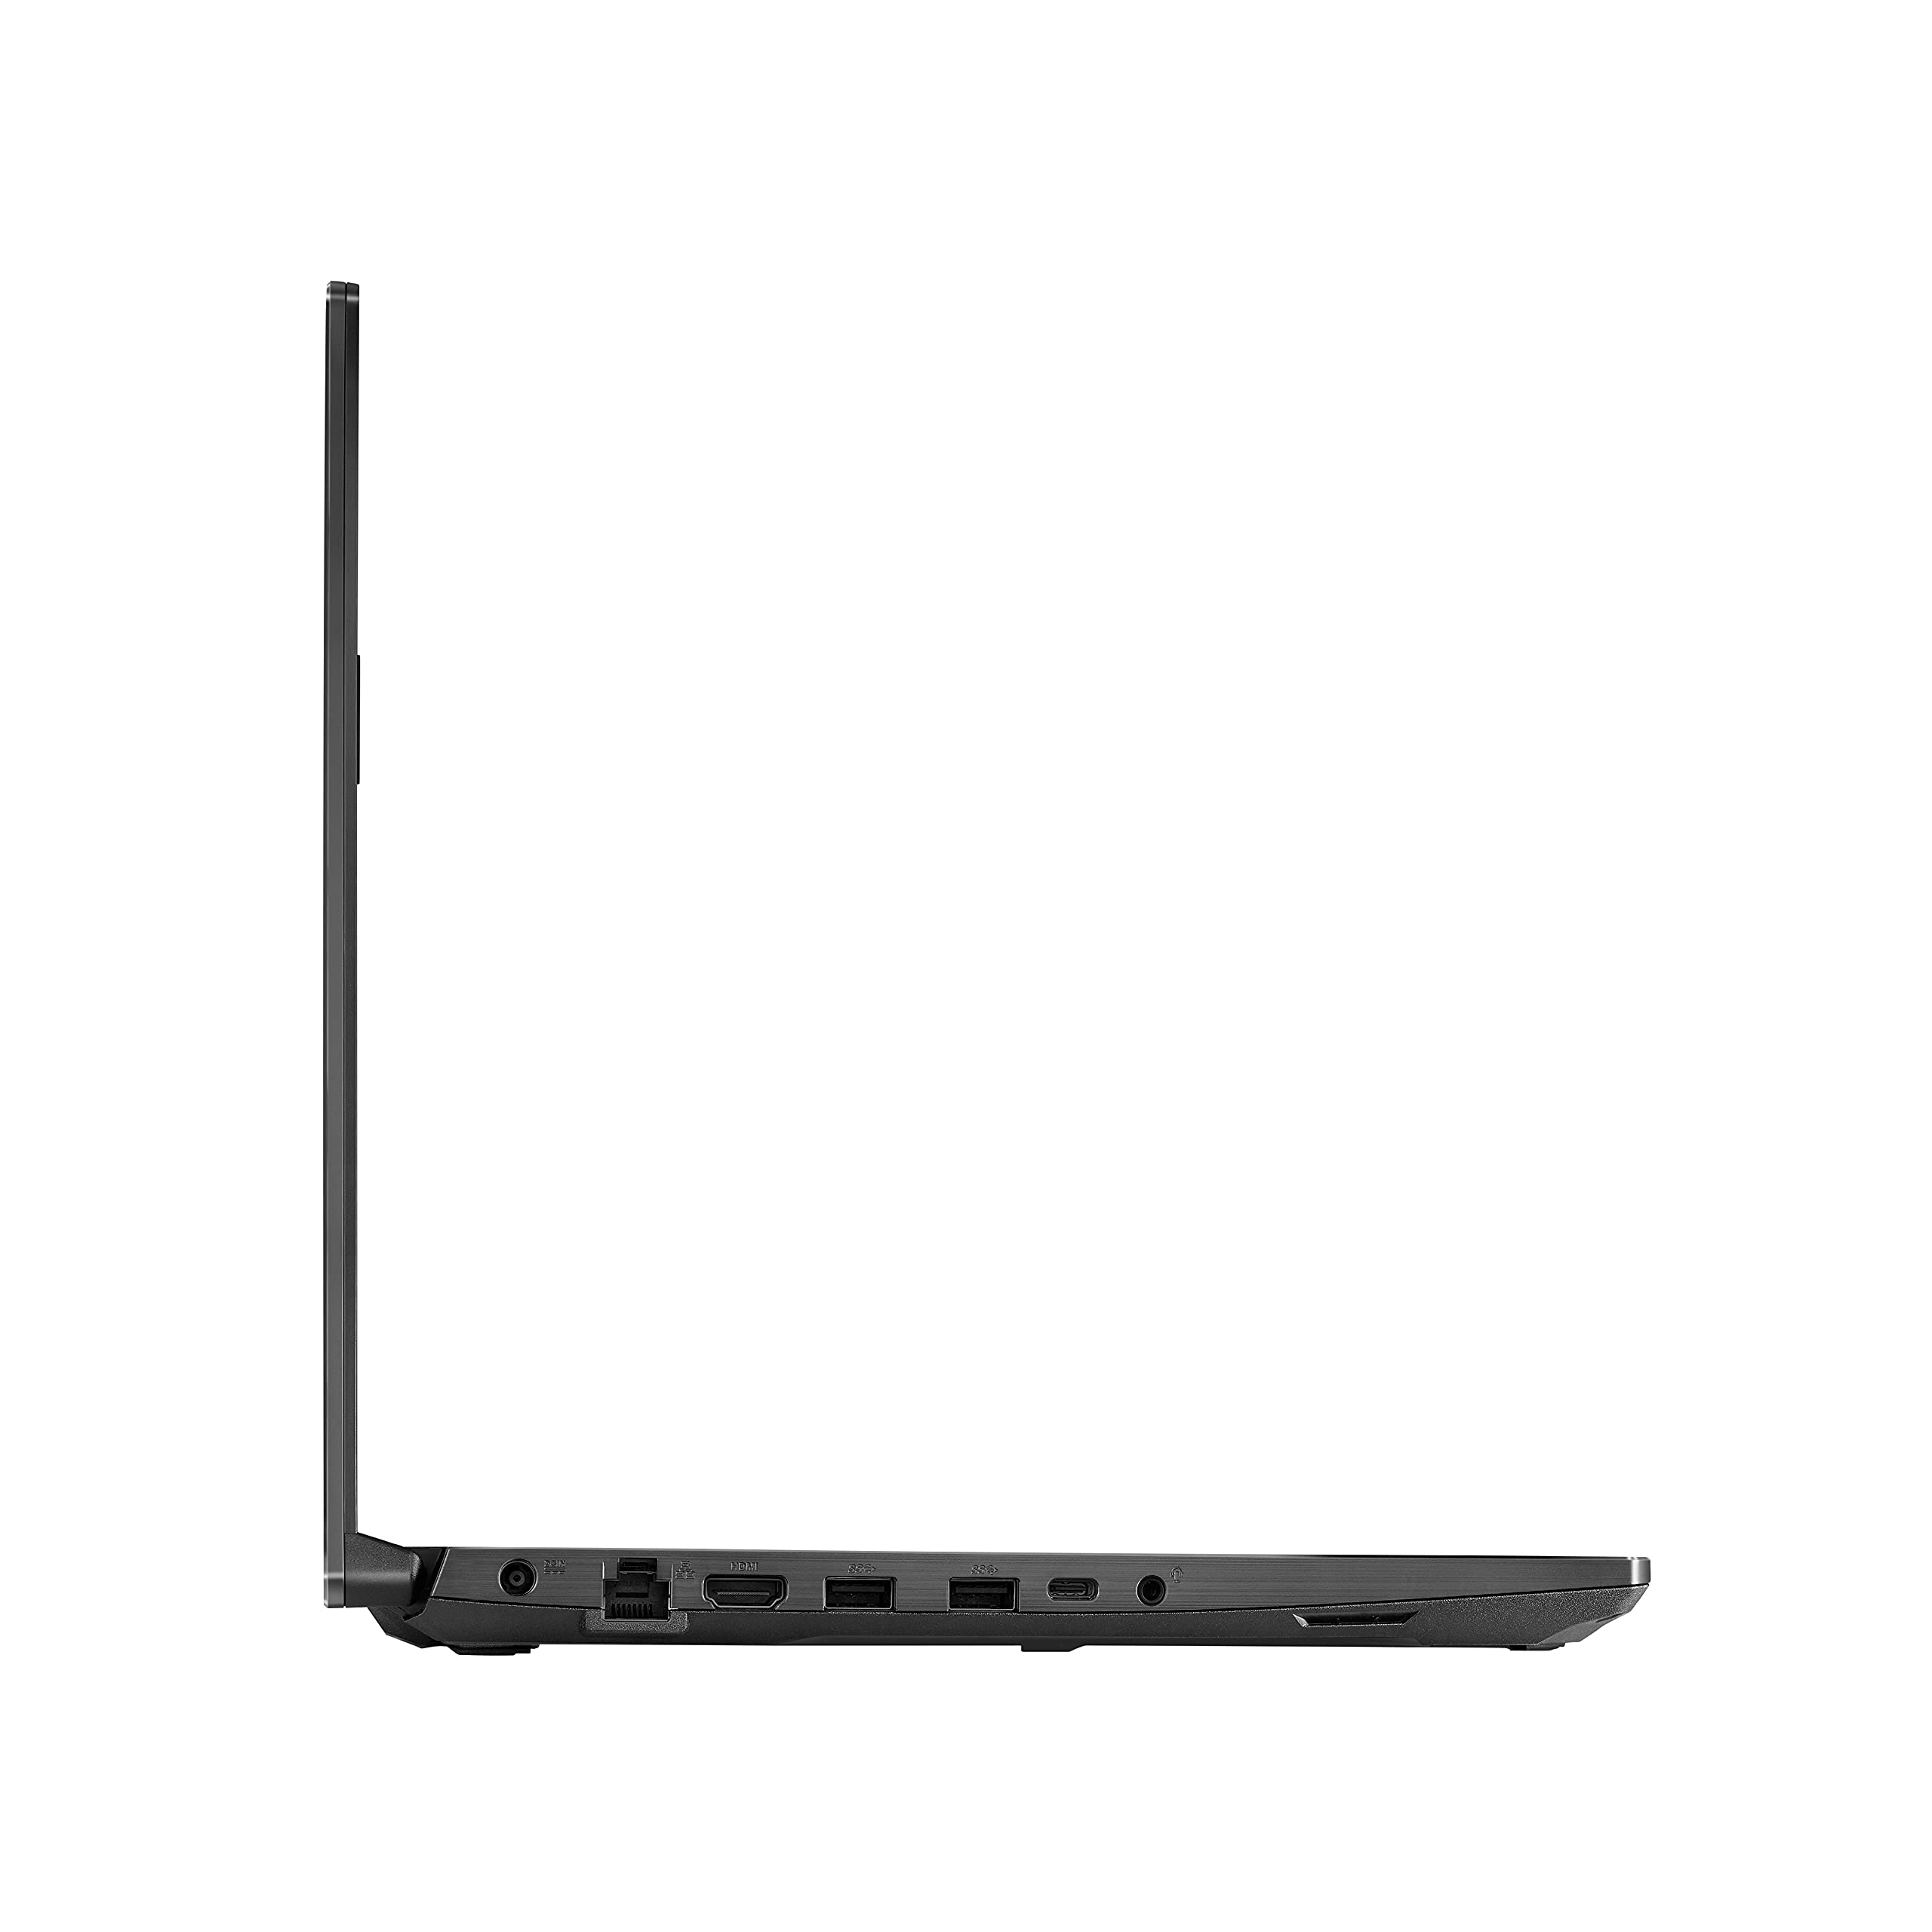 ASUS TUF Gaming F15 Gaming Laptop, 15.6” 144Hz FHD IPS-Type Display, Intel Core i7-11800H Processor, GeForce RTX 3060, 16GB DDR4 RAM, 1TB PCIe SSD, Wi-Fi 6, Windows 10 Home, TUF506HM-ES76